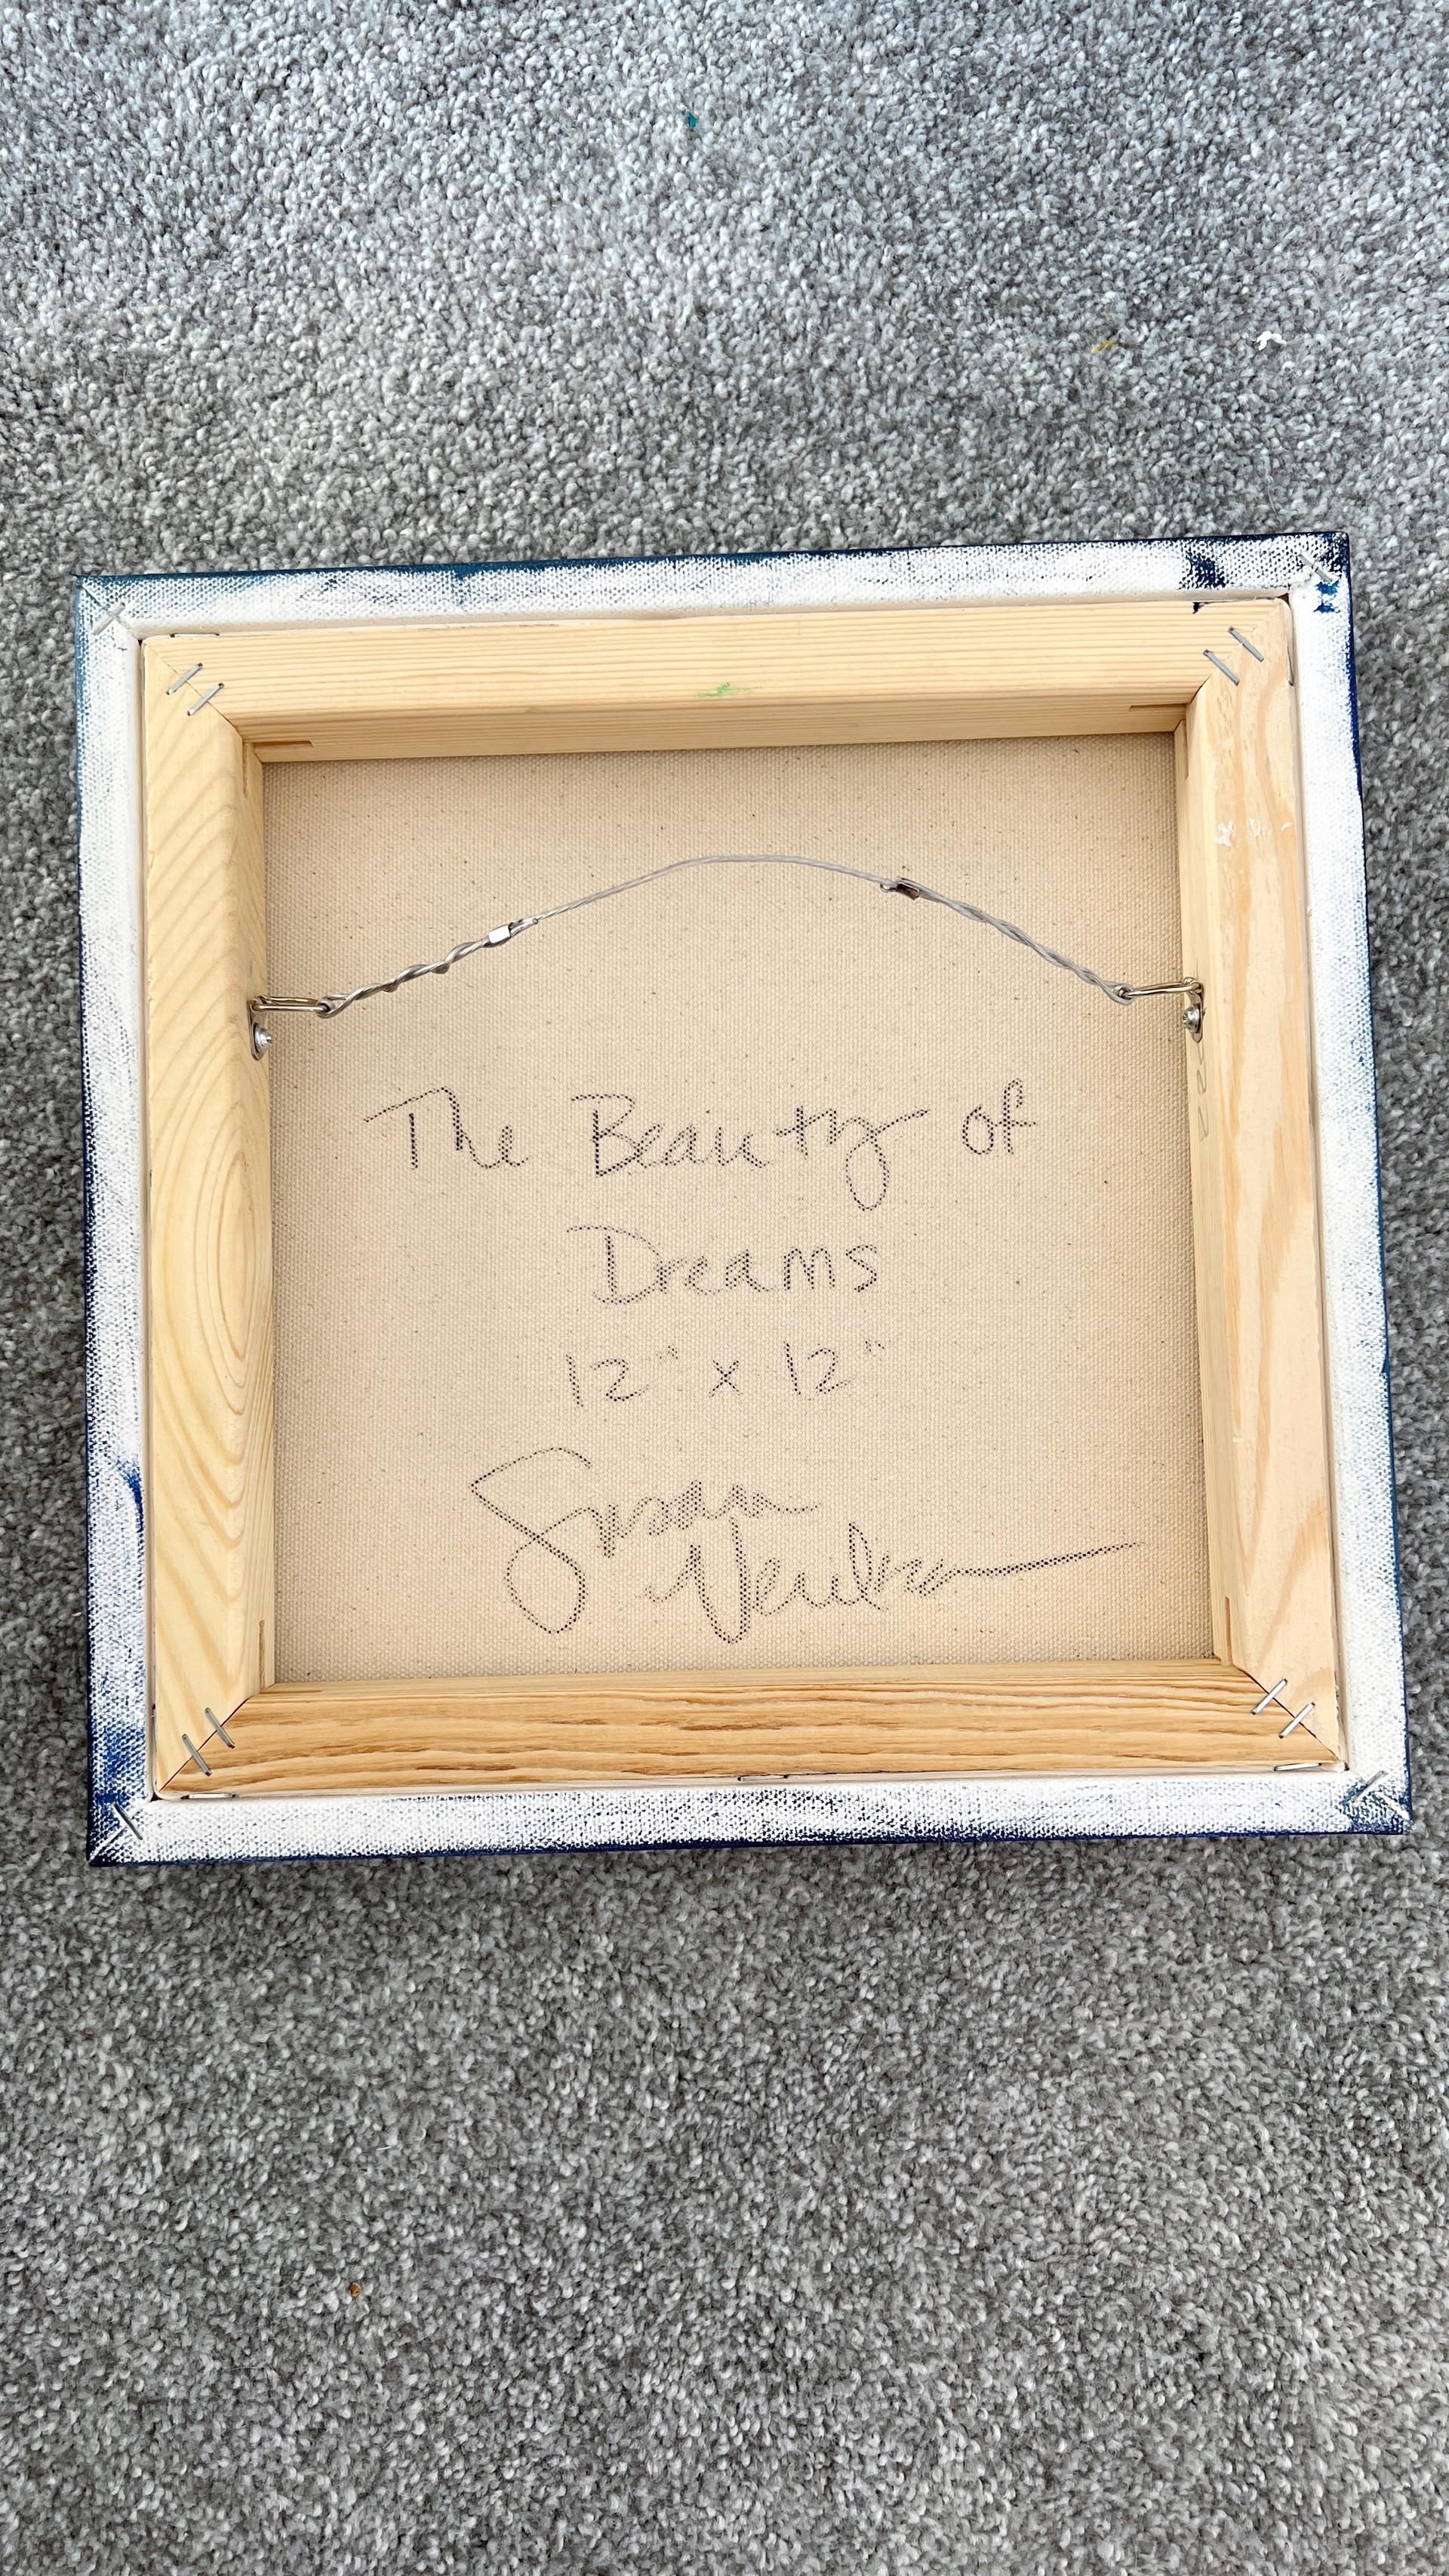 The Beauty of Dreams by Susan Verekar